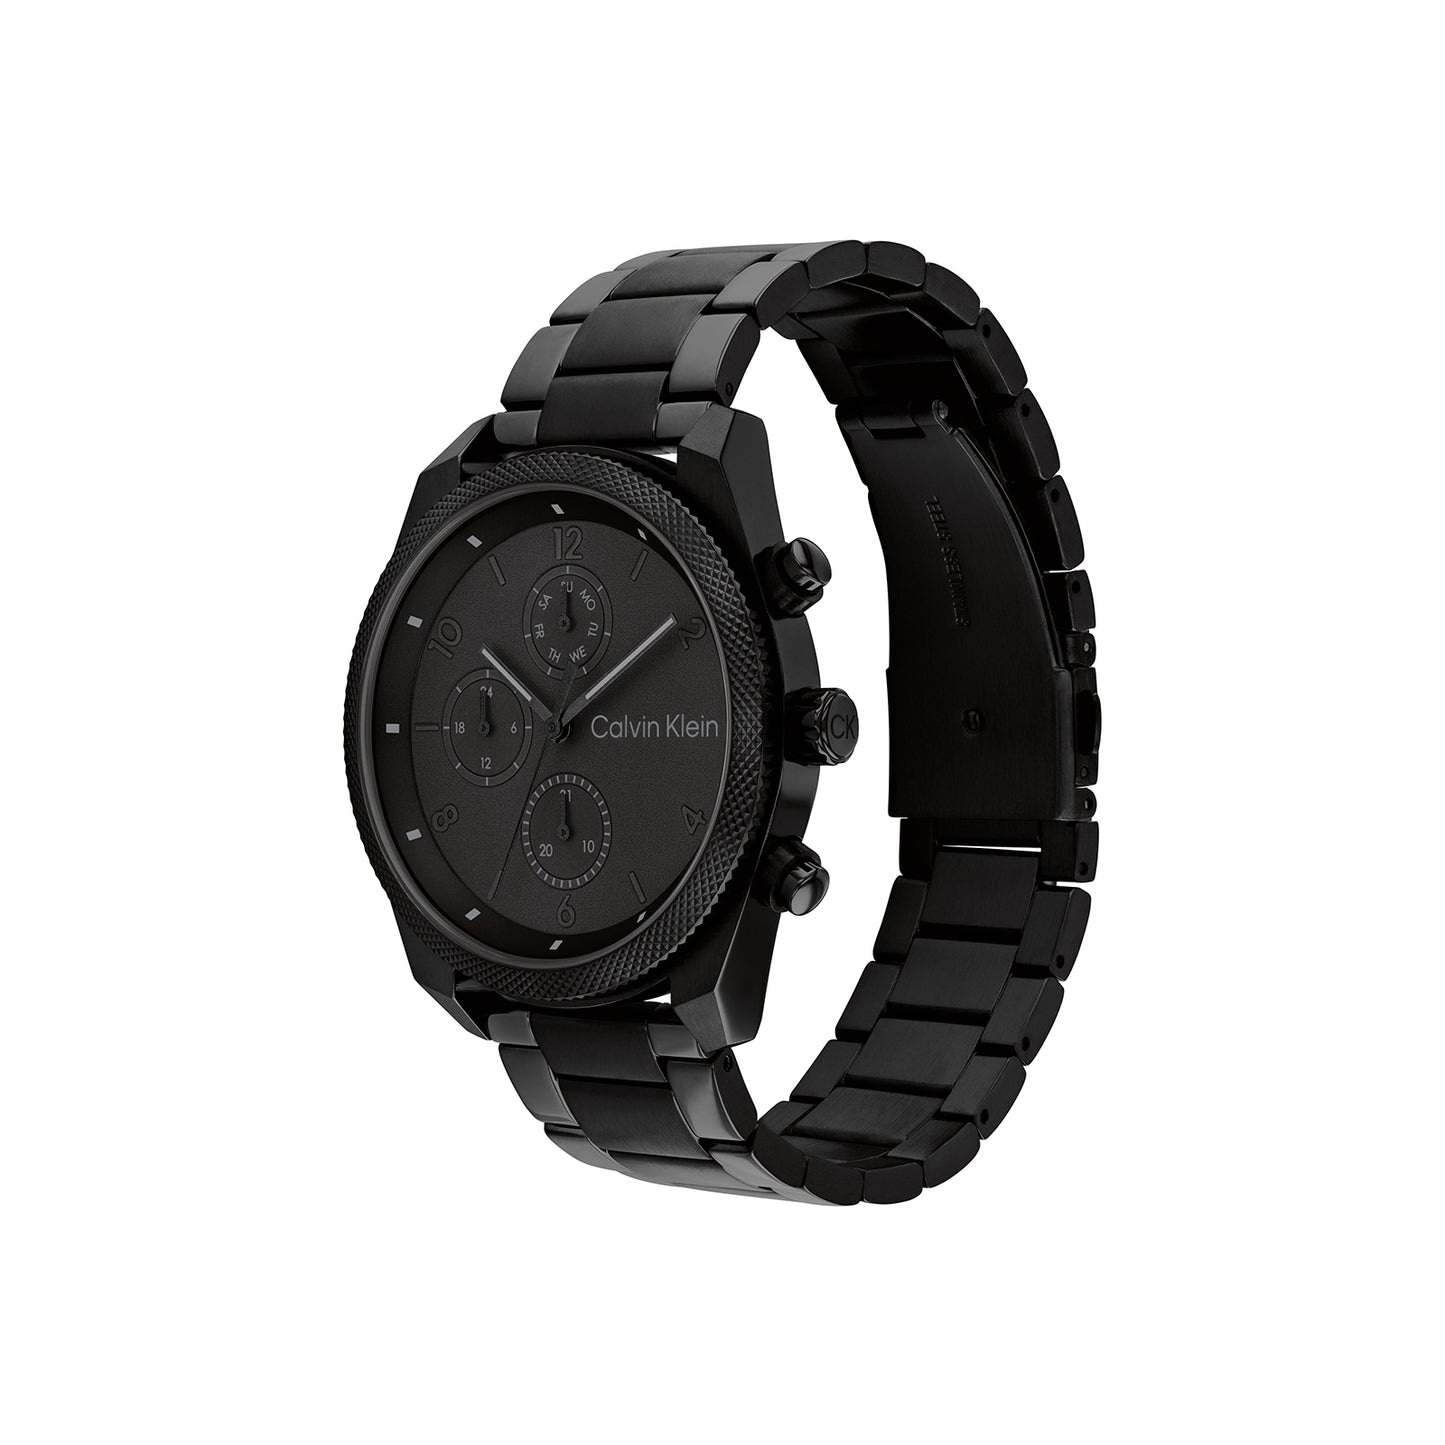 Calvin Klein 25200359 Men's Ionic Black Plated Steel Watch